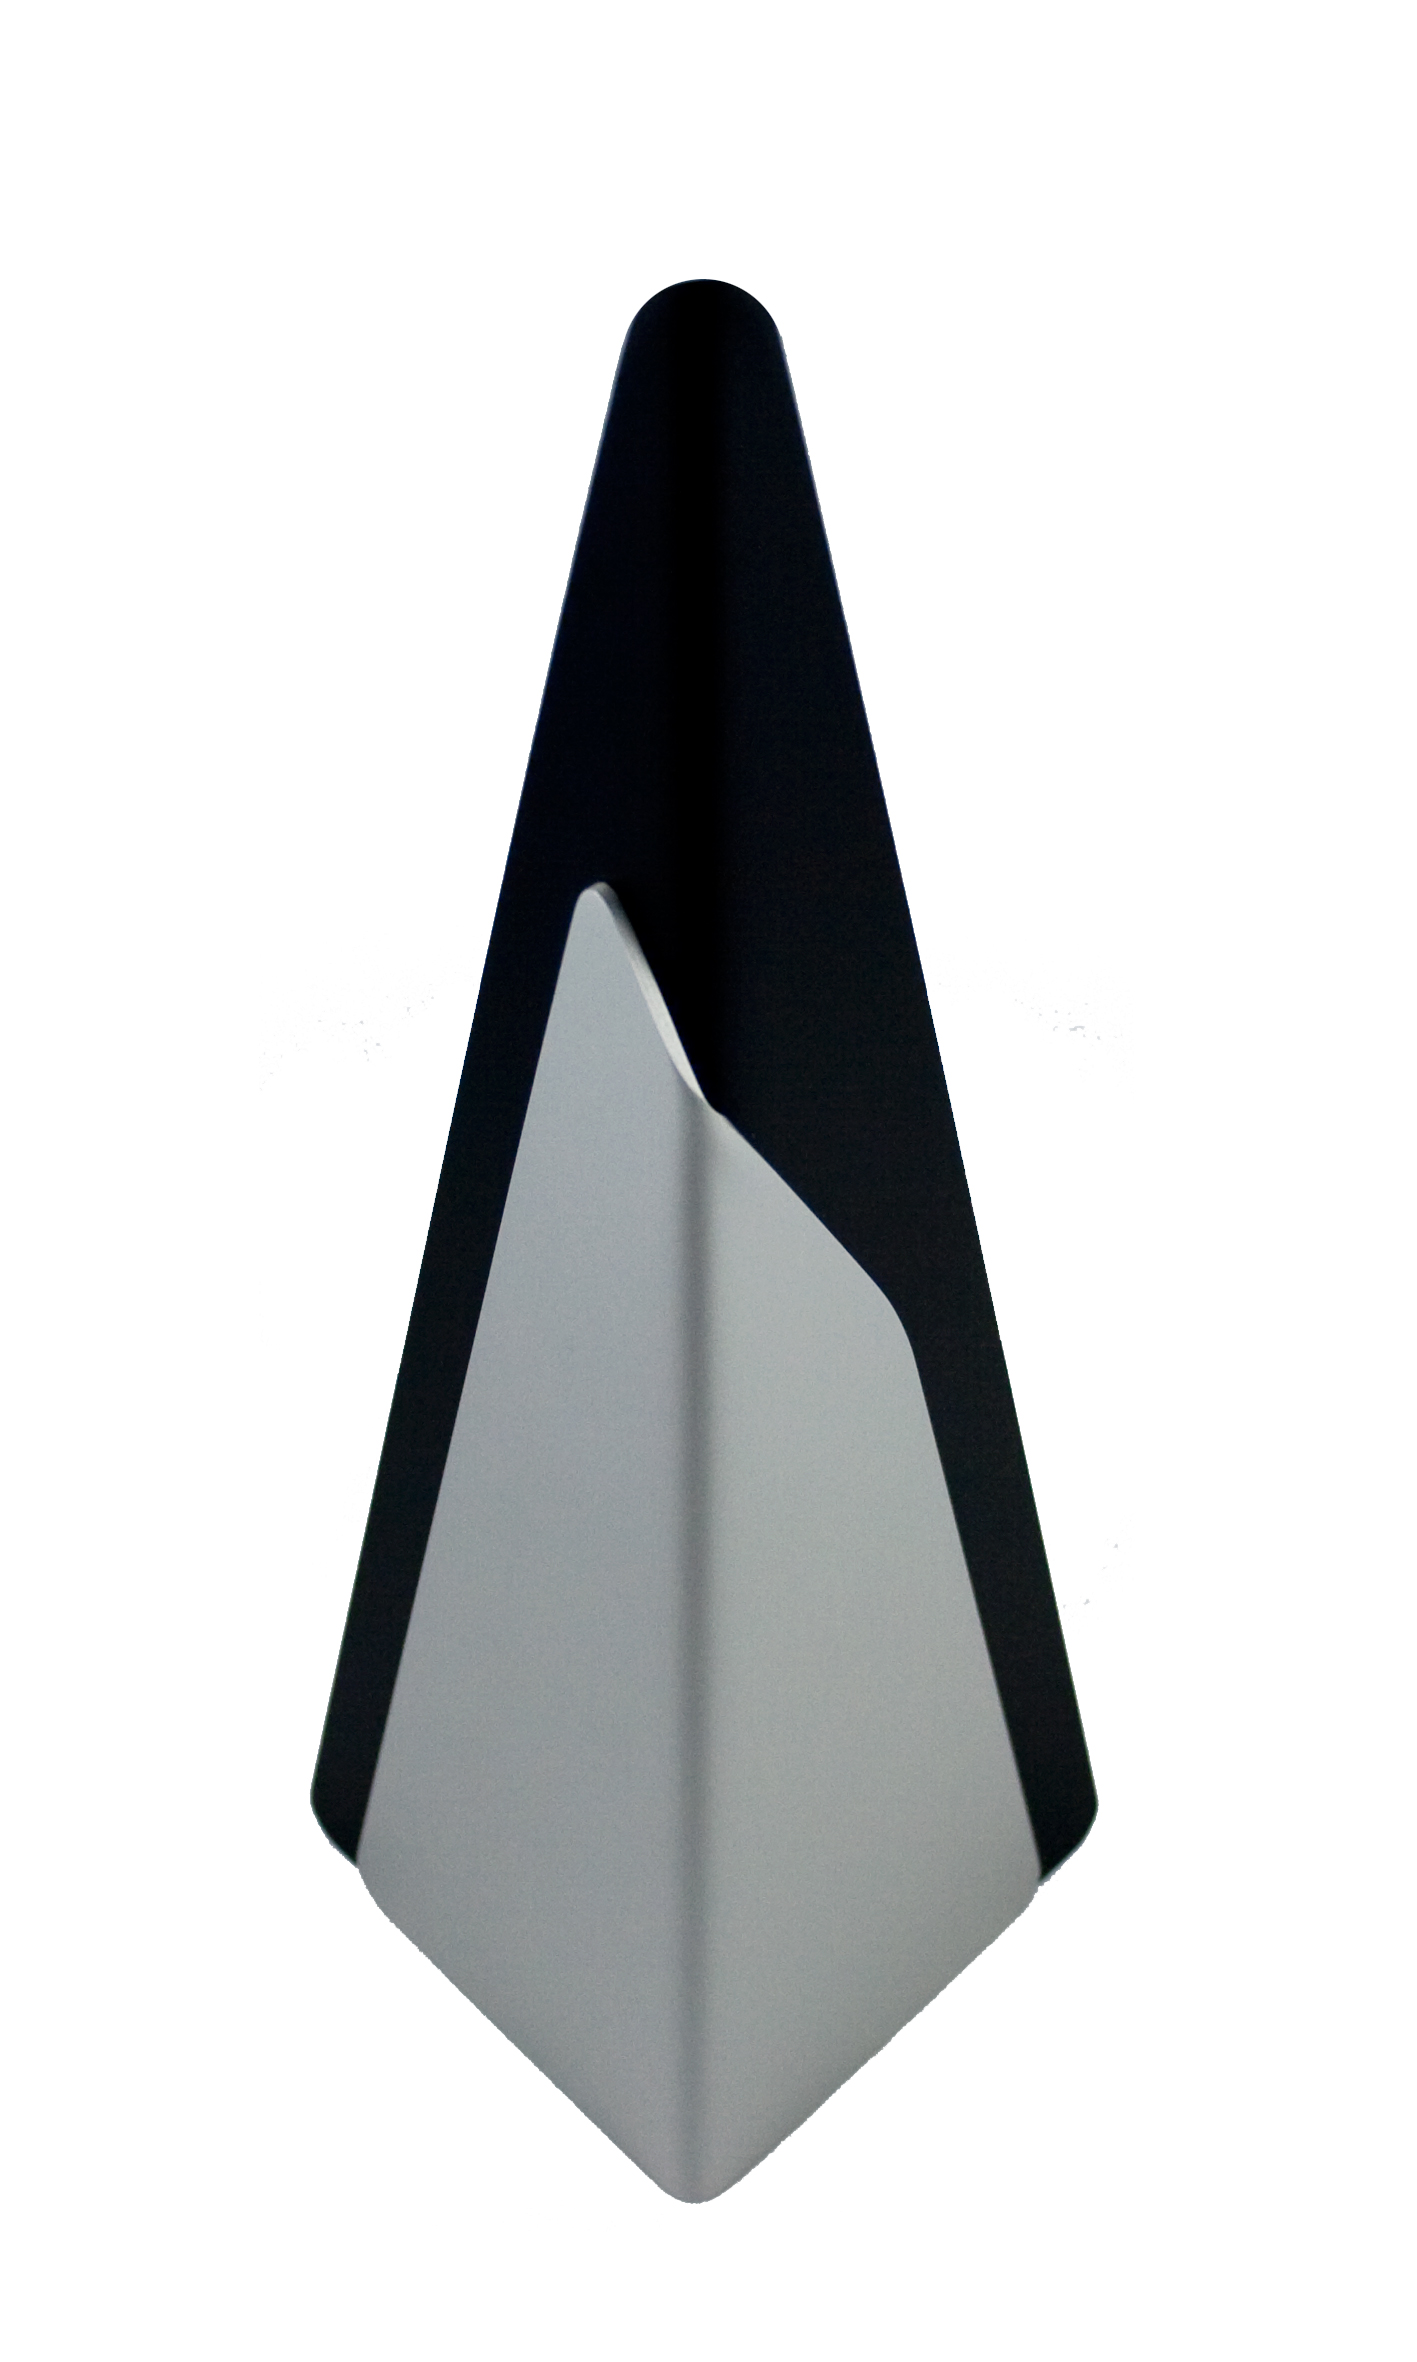 summit-awards-metal-folded-aluminium-anodized-modern